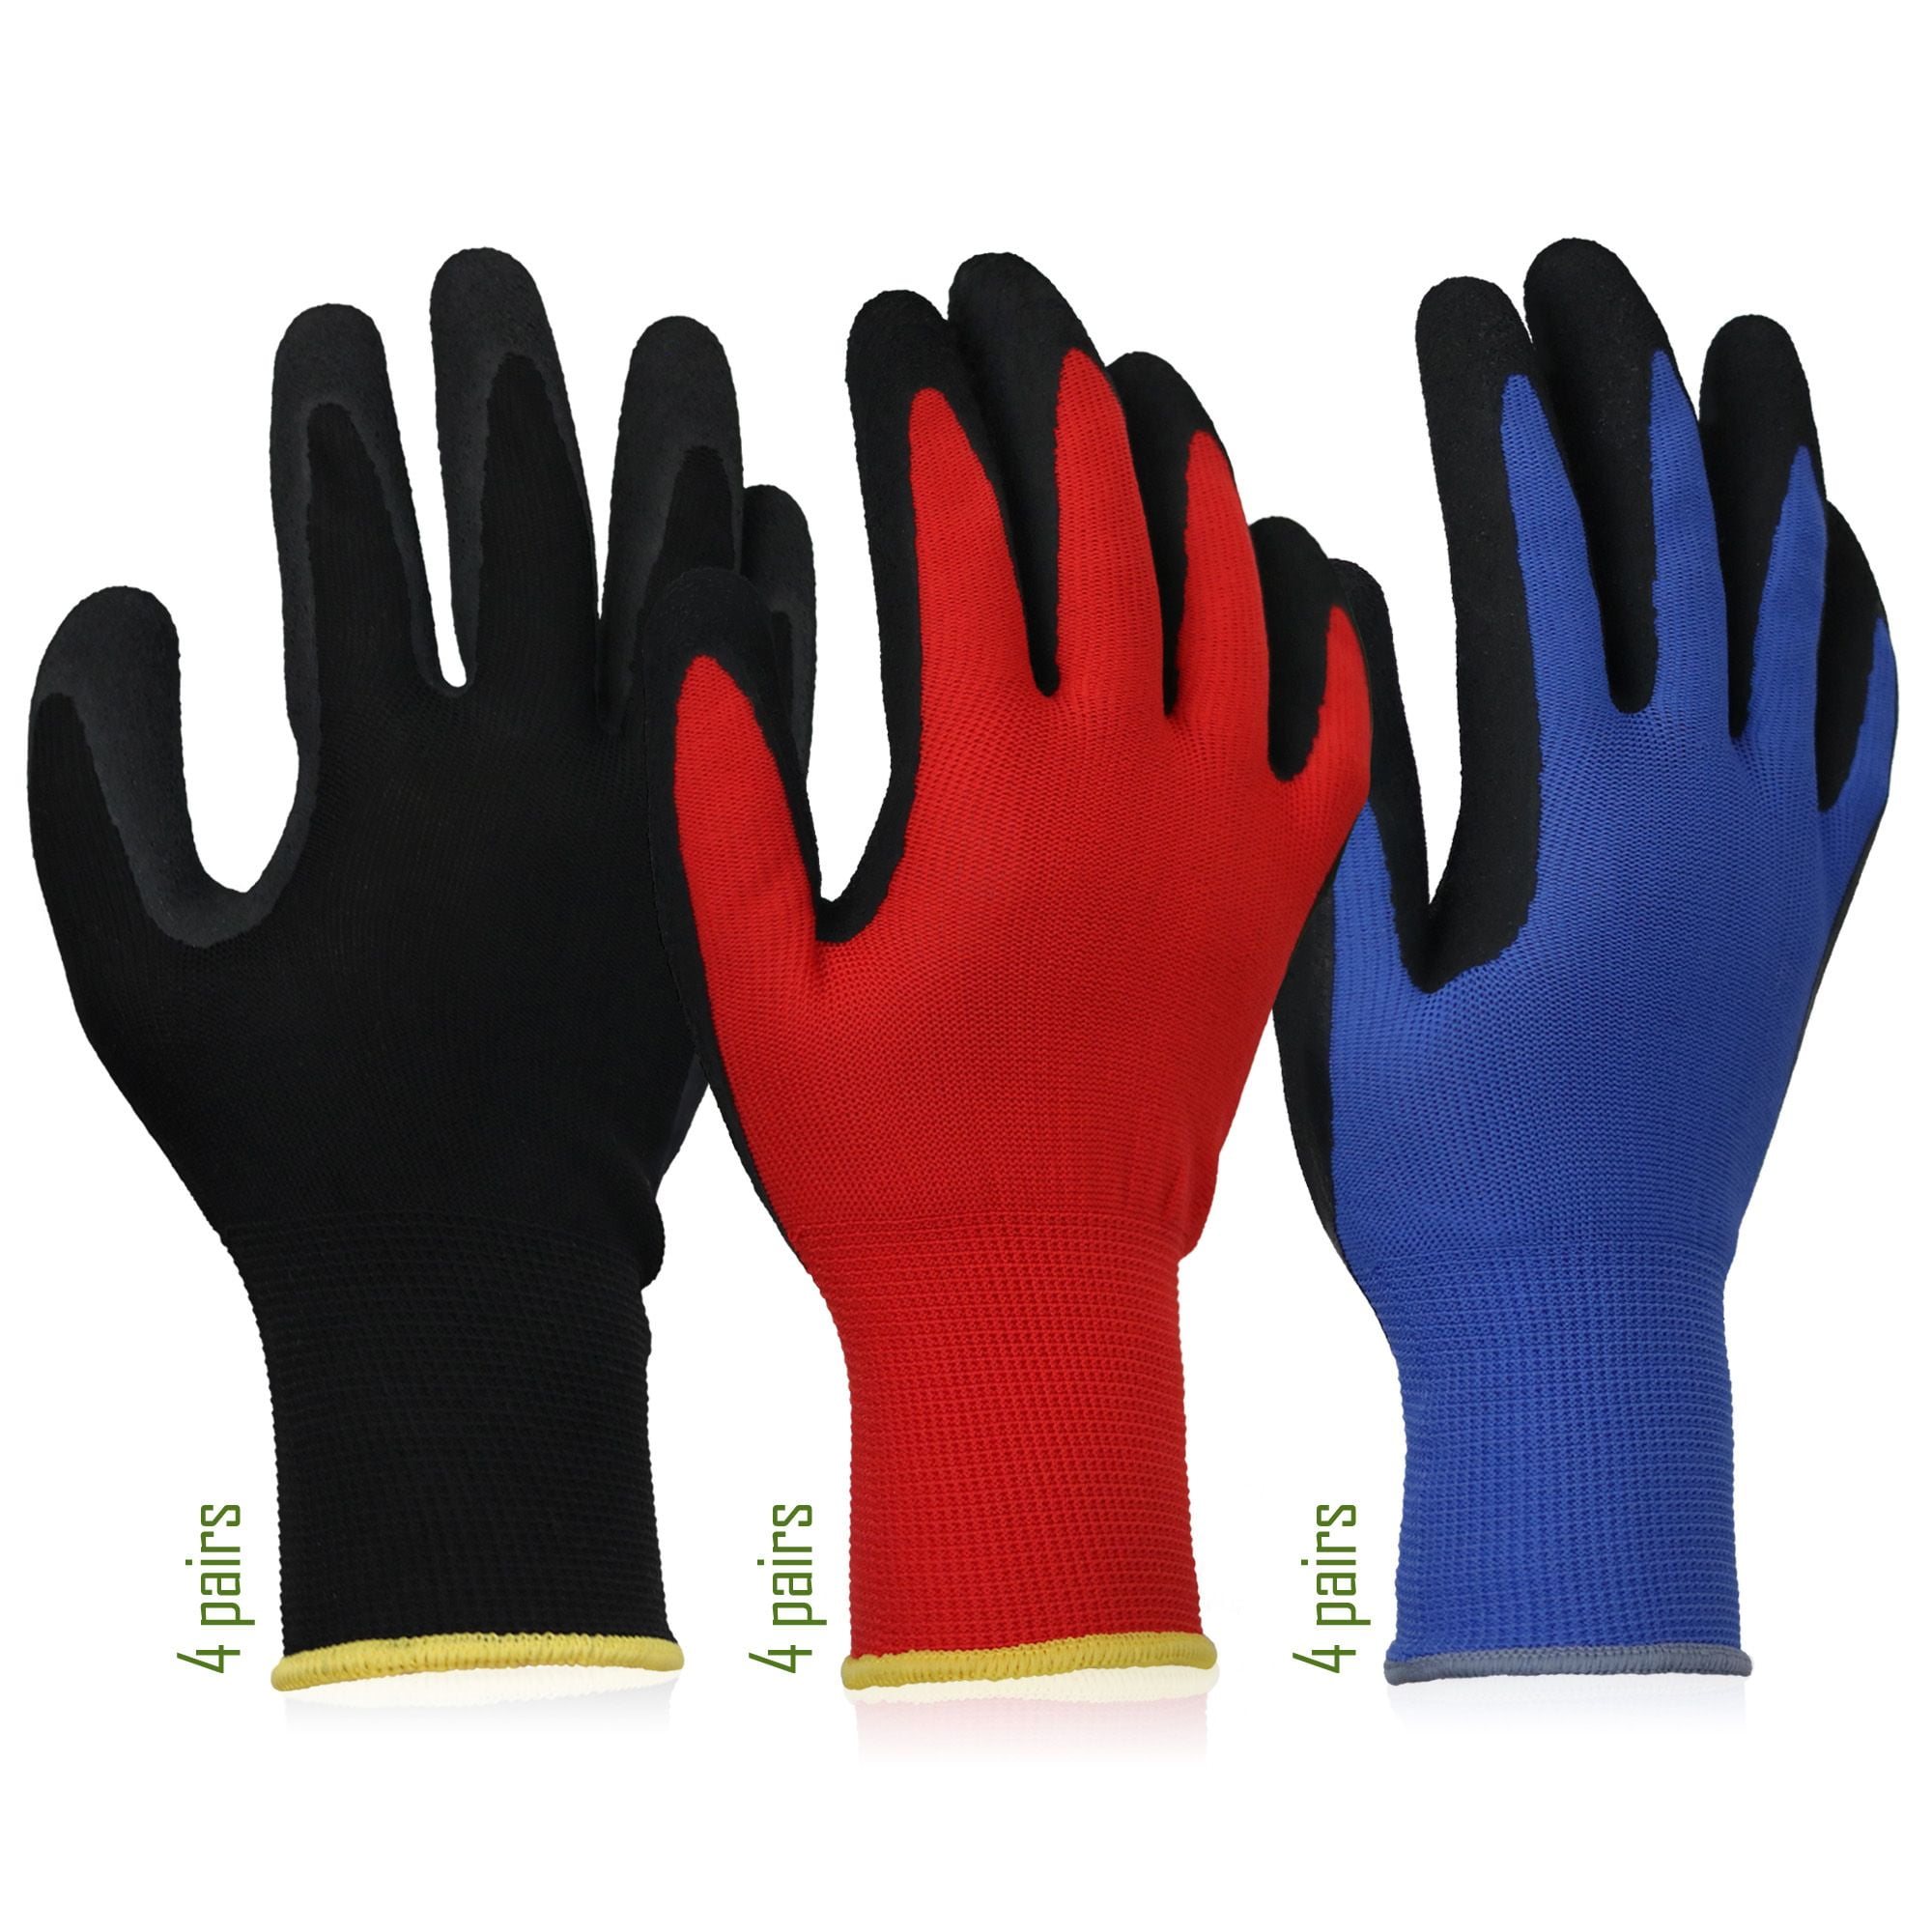 24 x Safety Work Gloves Black Grip & Grab Latex Coated Builders Gardening Gloves 